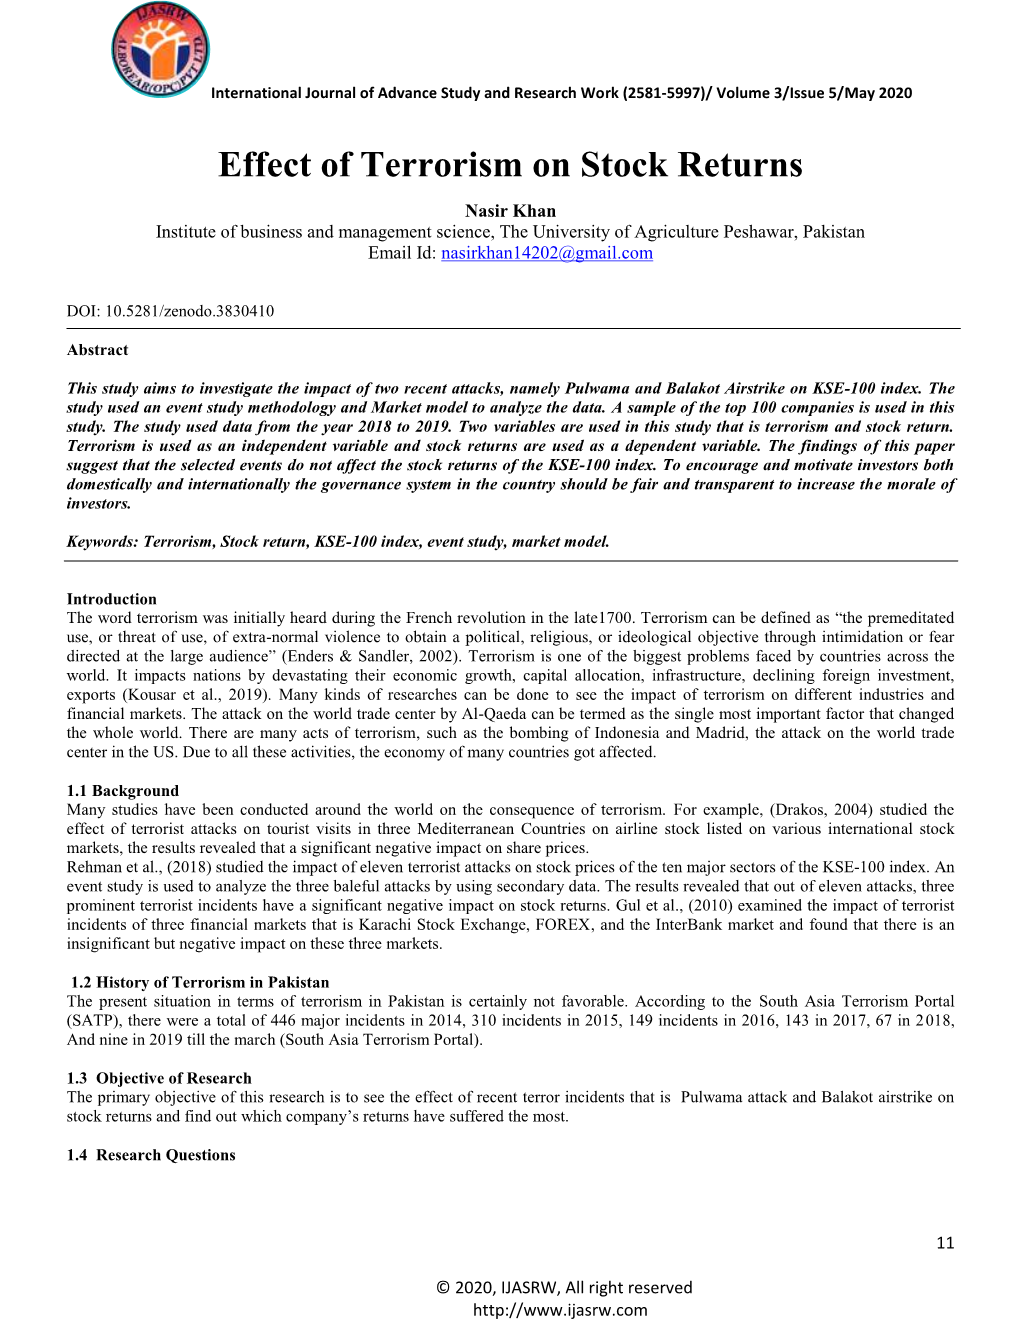 Effect of Terrorism on Stock Returns